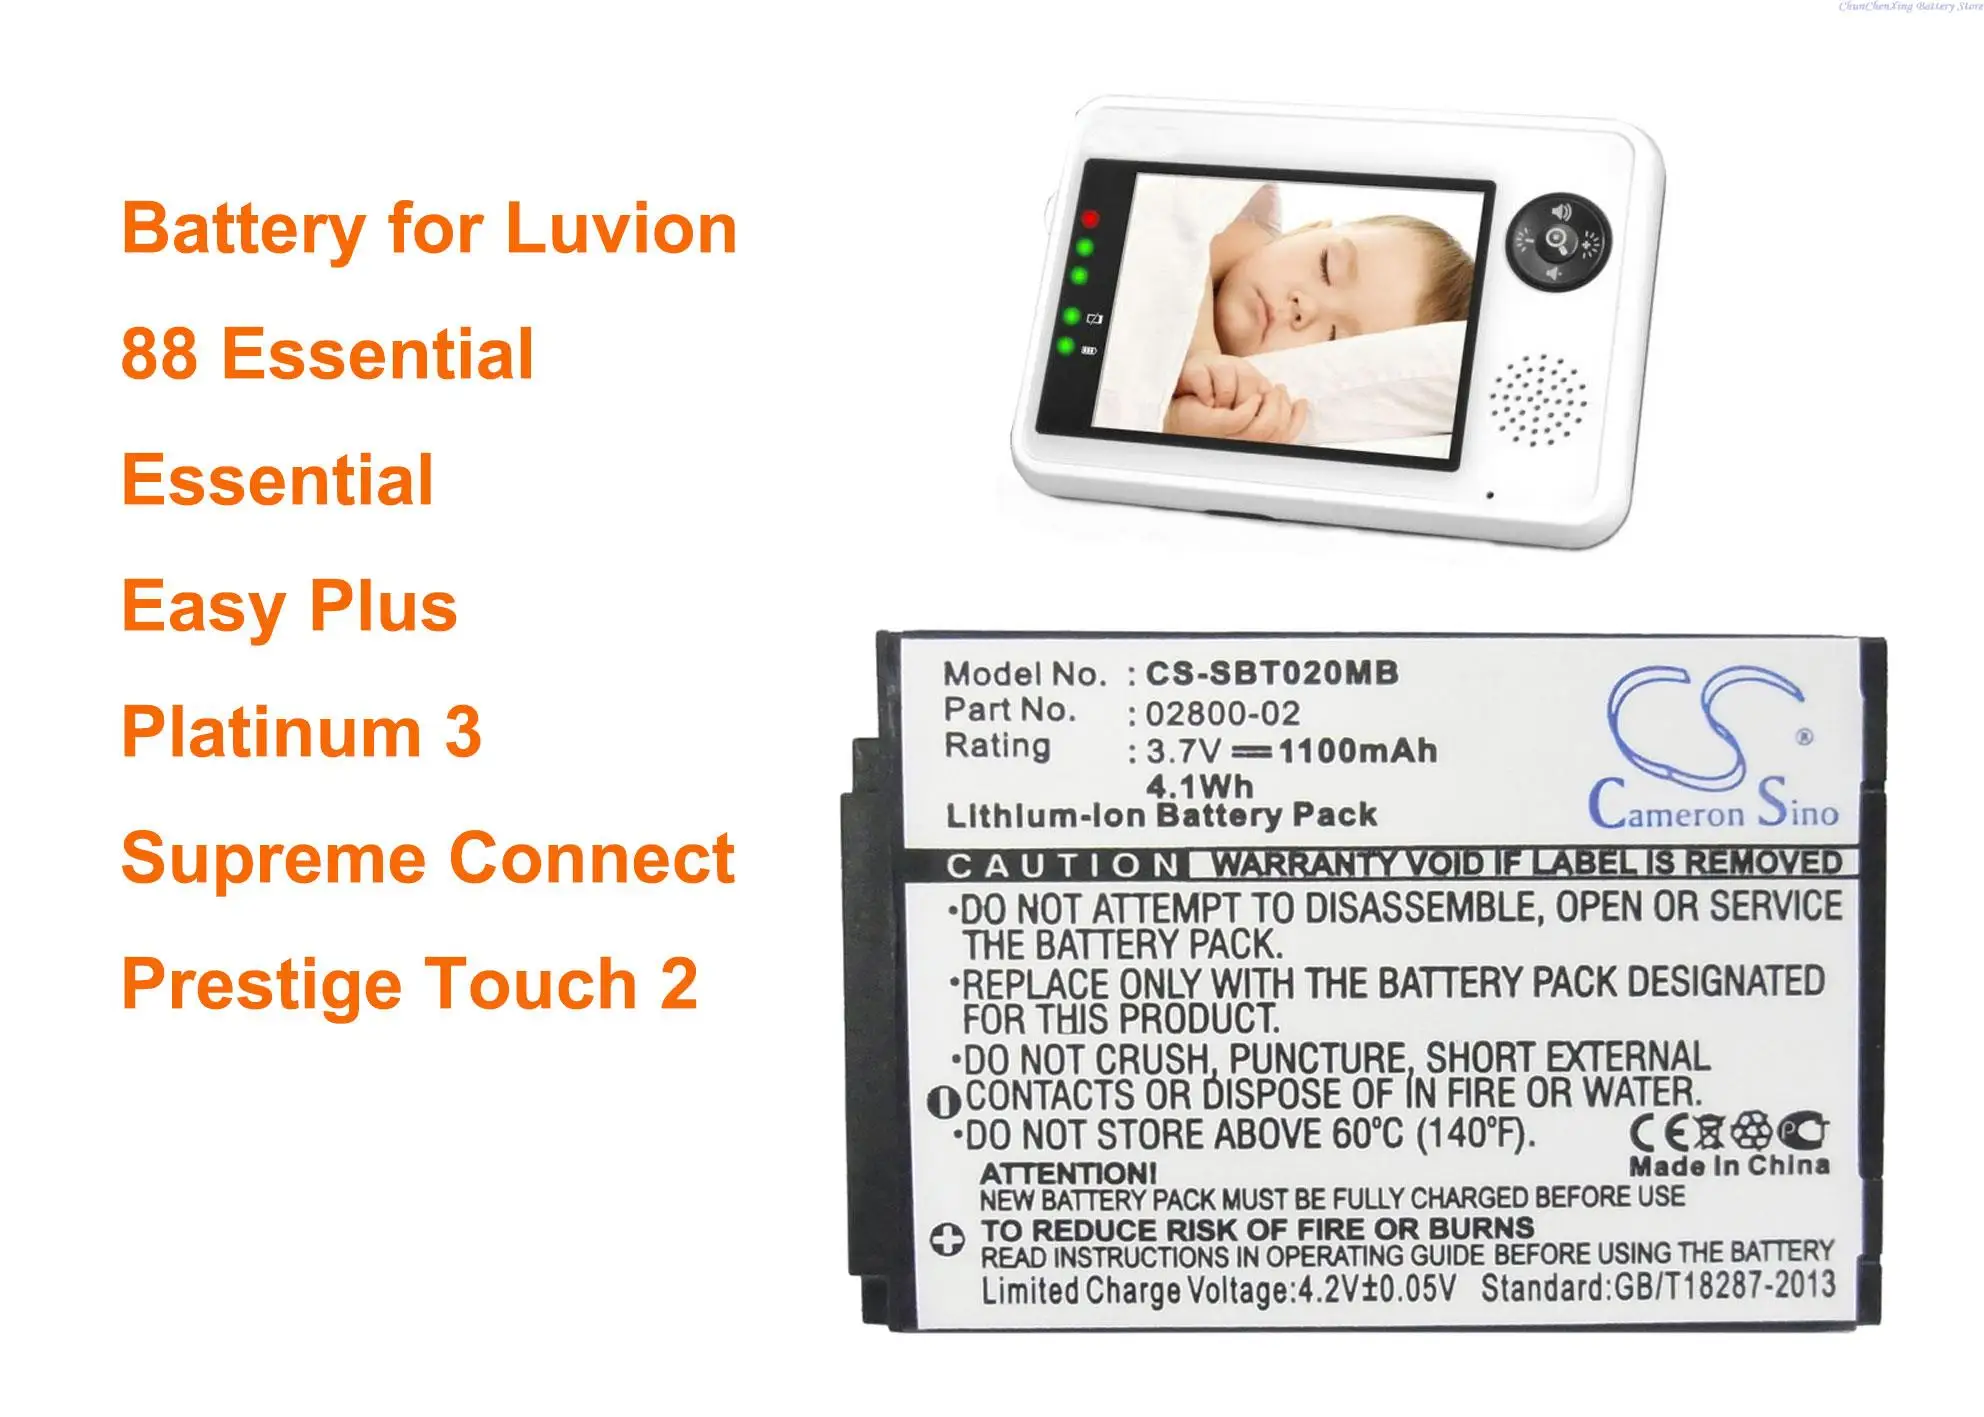 

OrangeYu 1100mAh Battery for Luvion 88 Essential, Essential, Easy Plus, Platinum 3, Supreme Connect, Prestige Touch 2